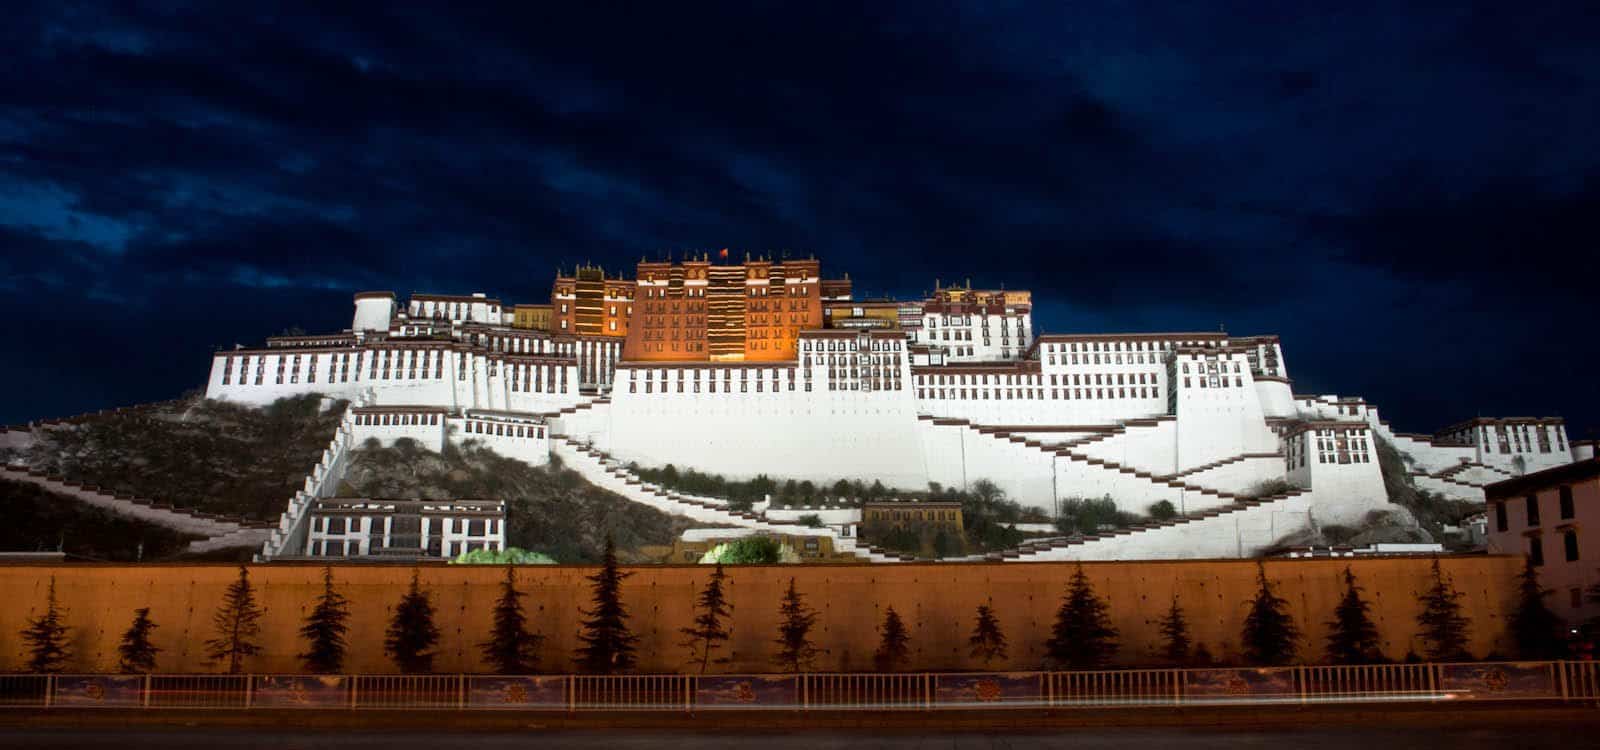 Bigfoottraveller.com l 西藏是天堂？